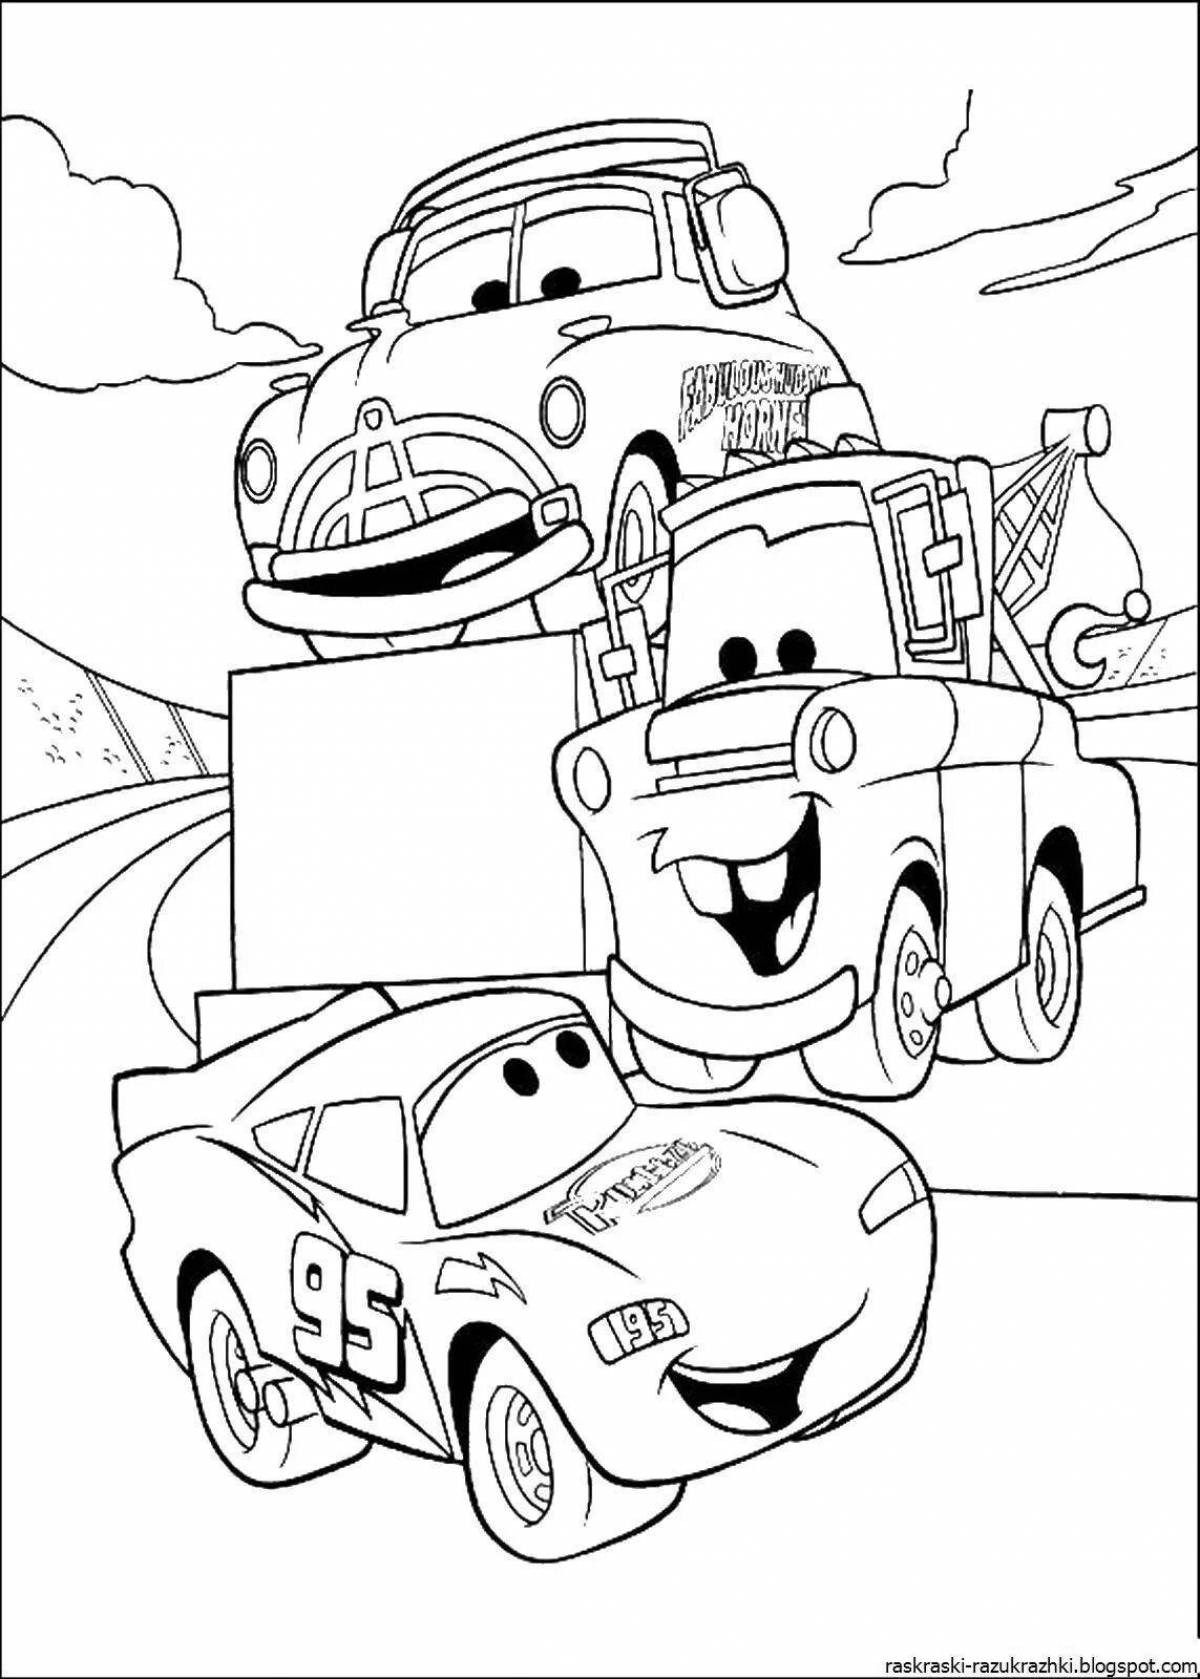 Coloring page charming car car